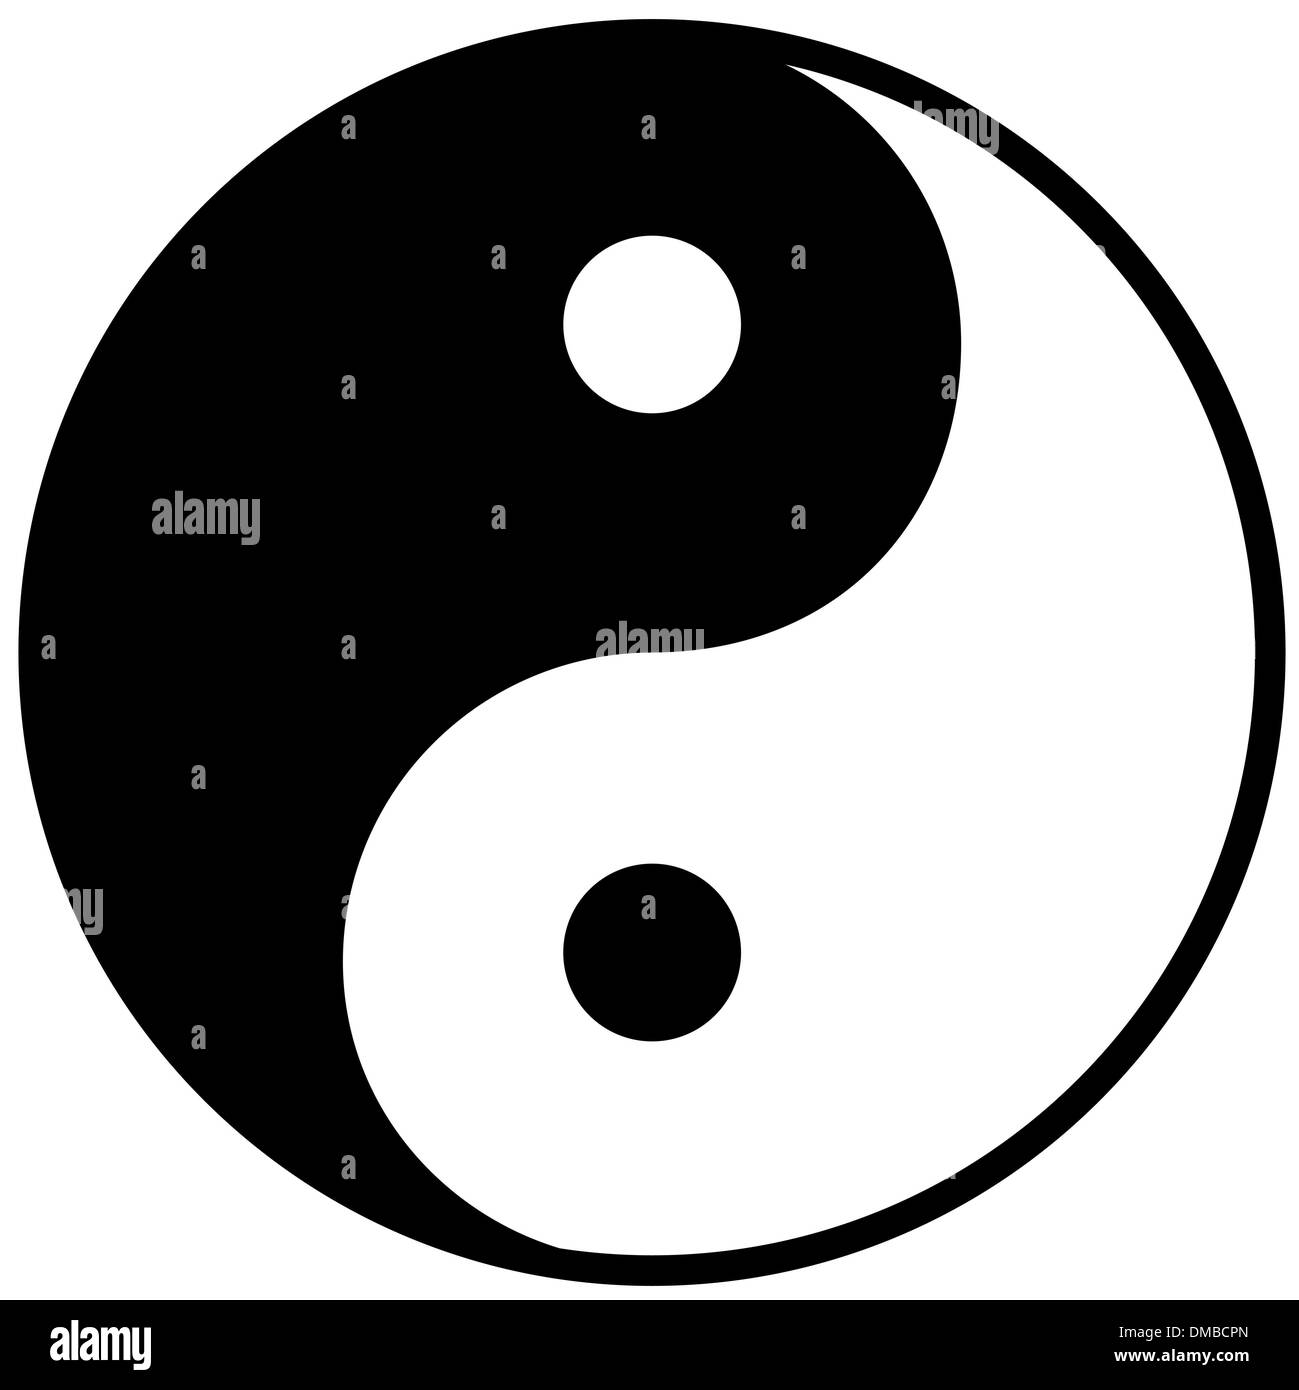 Ying yang symbol of harmony and balance Stock Vector